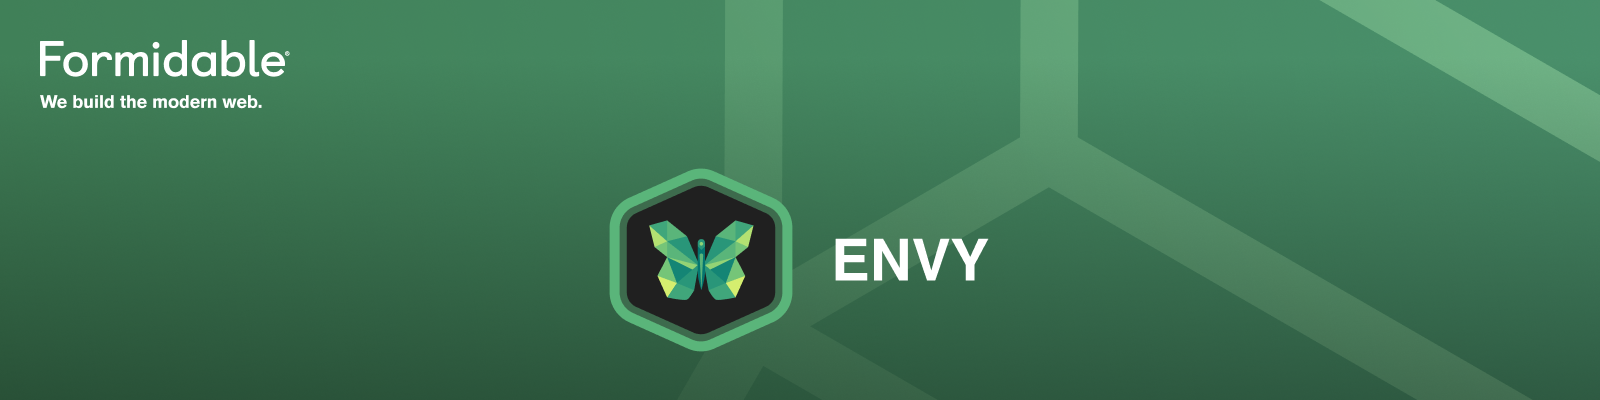 Envy — Formidable, We build the modern web